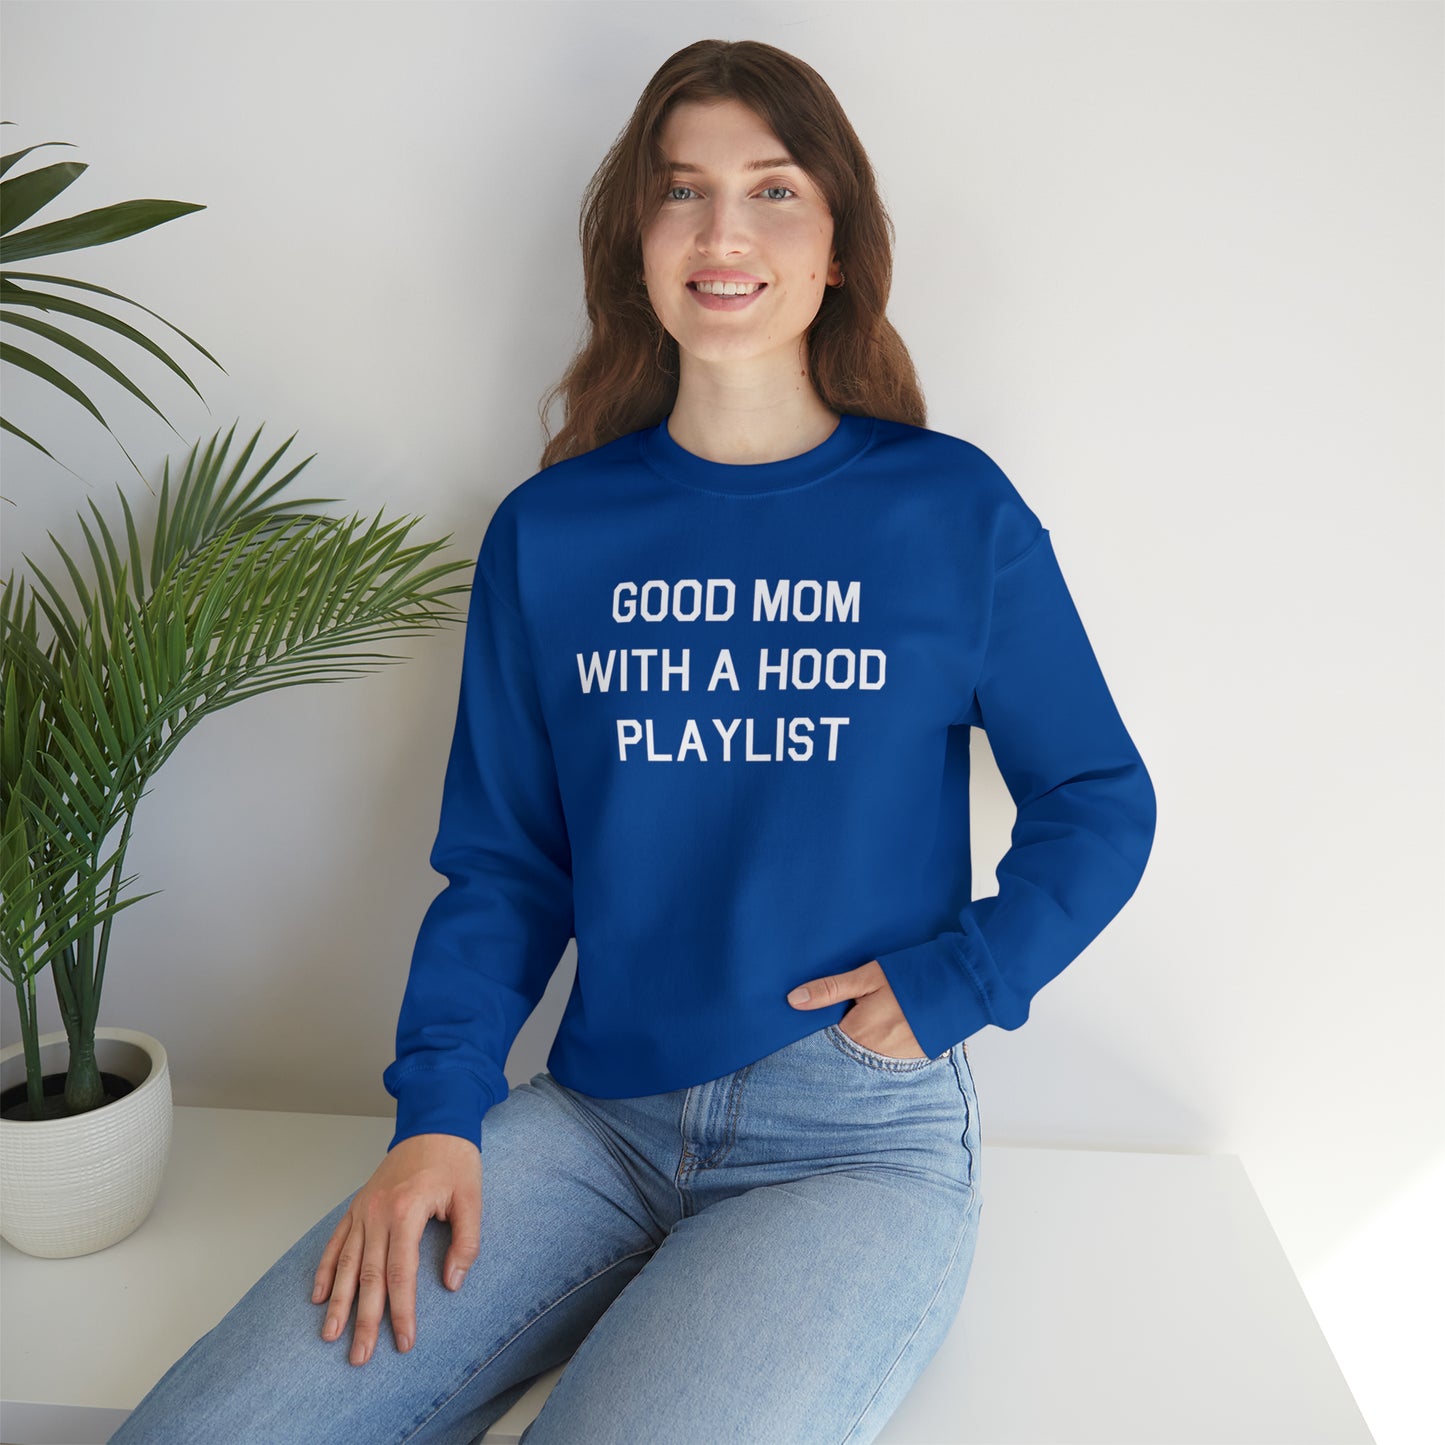 Good Mom With A Hood Playlist Crewneck Sweatshirt for a Good Mom